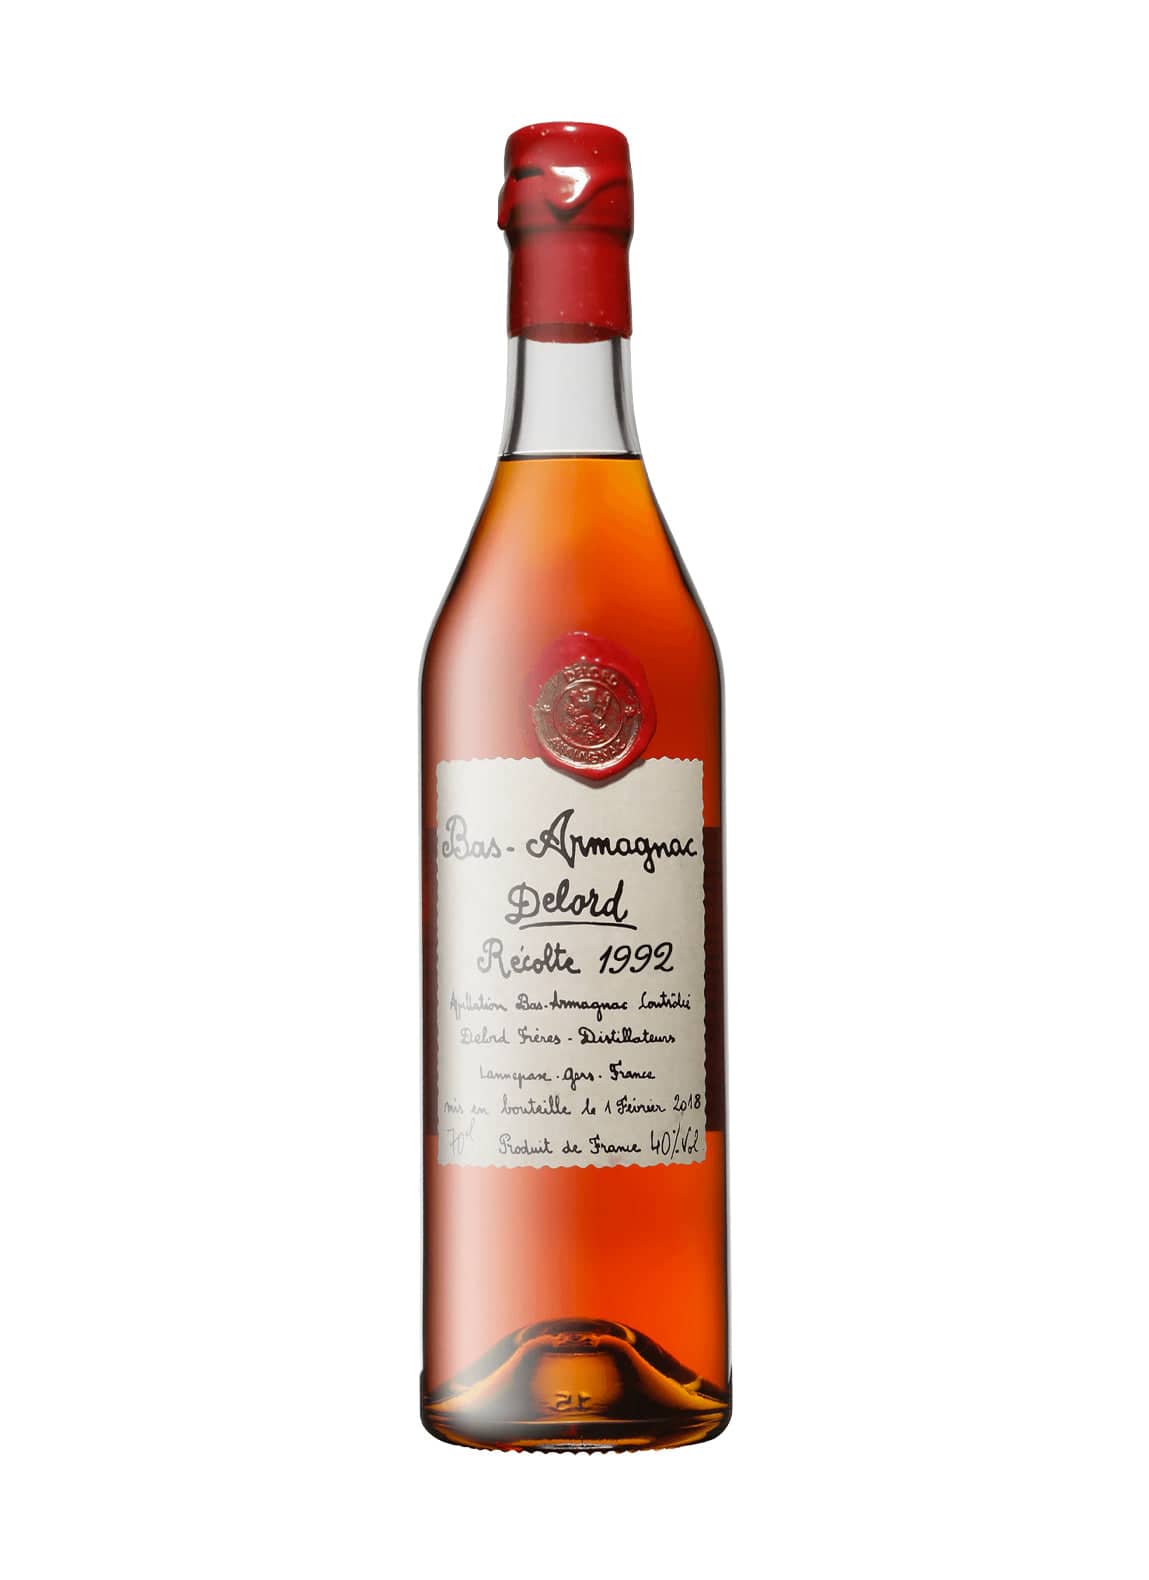 Delord 1992 Bas Armagnac 40% 700ml | Brandy | Shop online at Spirits of France